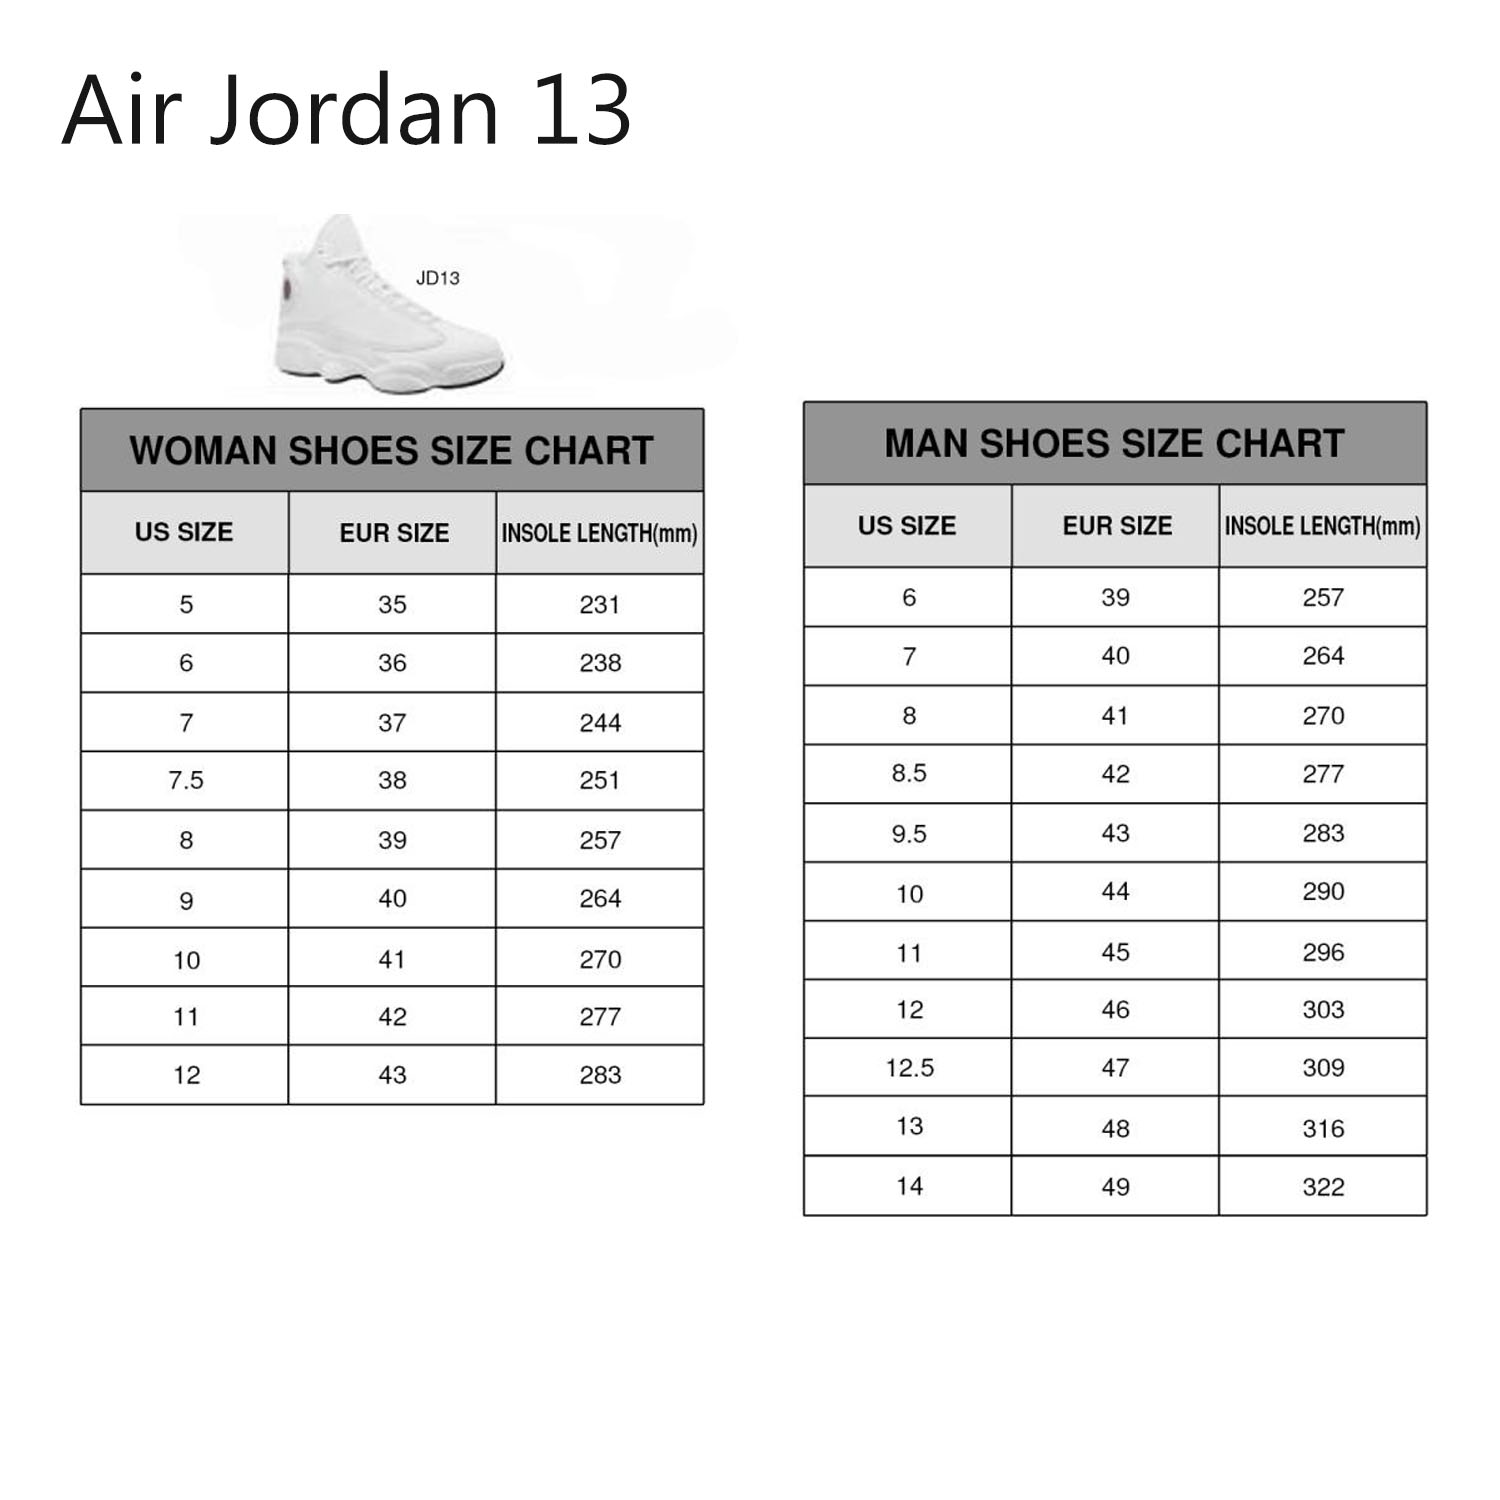 Air Jordan 13 Size Chartpx Colorado Rockies Special Design Air Jordan 13 Sneakers Shoes